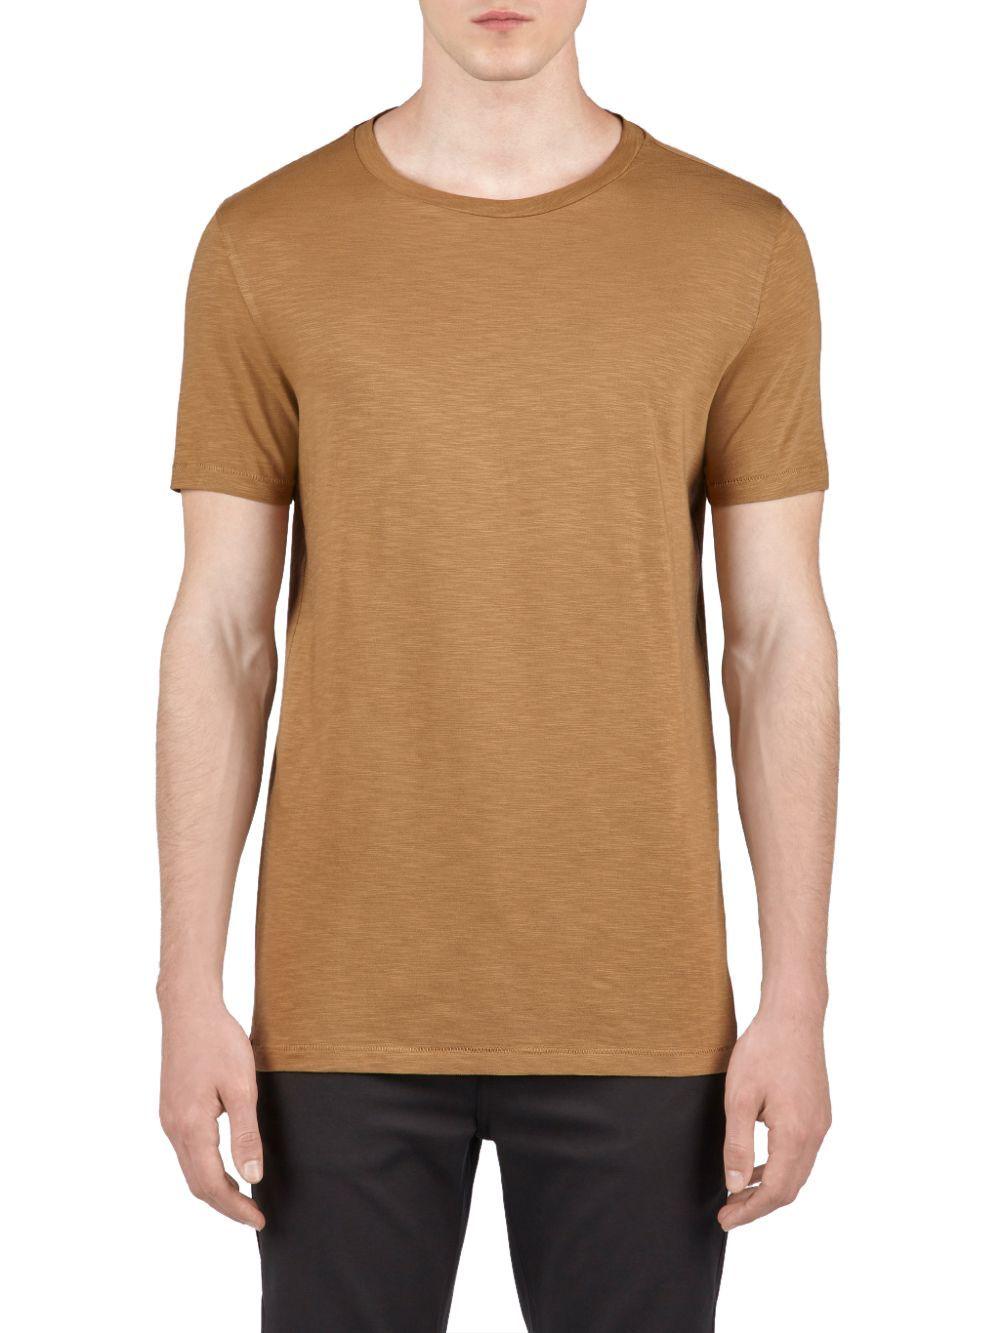 Neil Barrett Cotton T-shirt in Brown for Men - Lyst